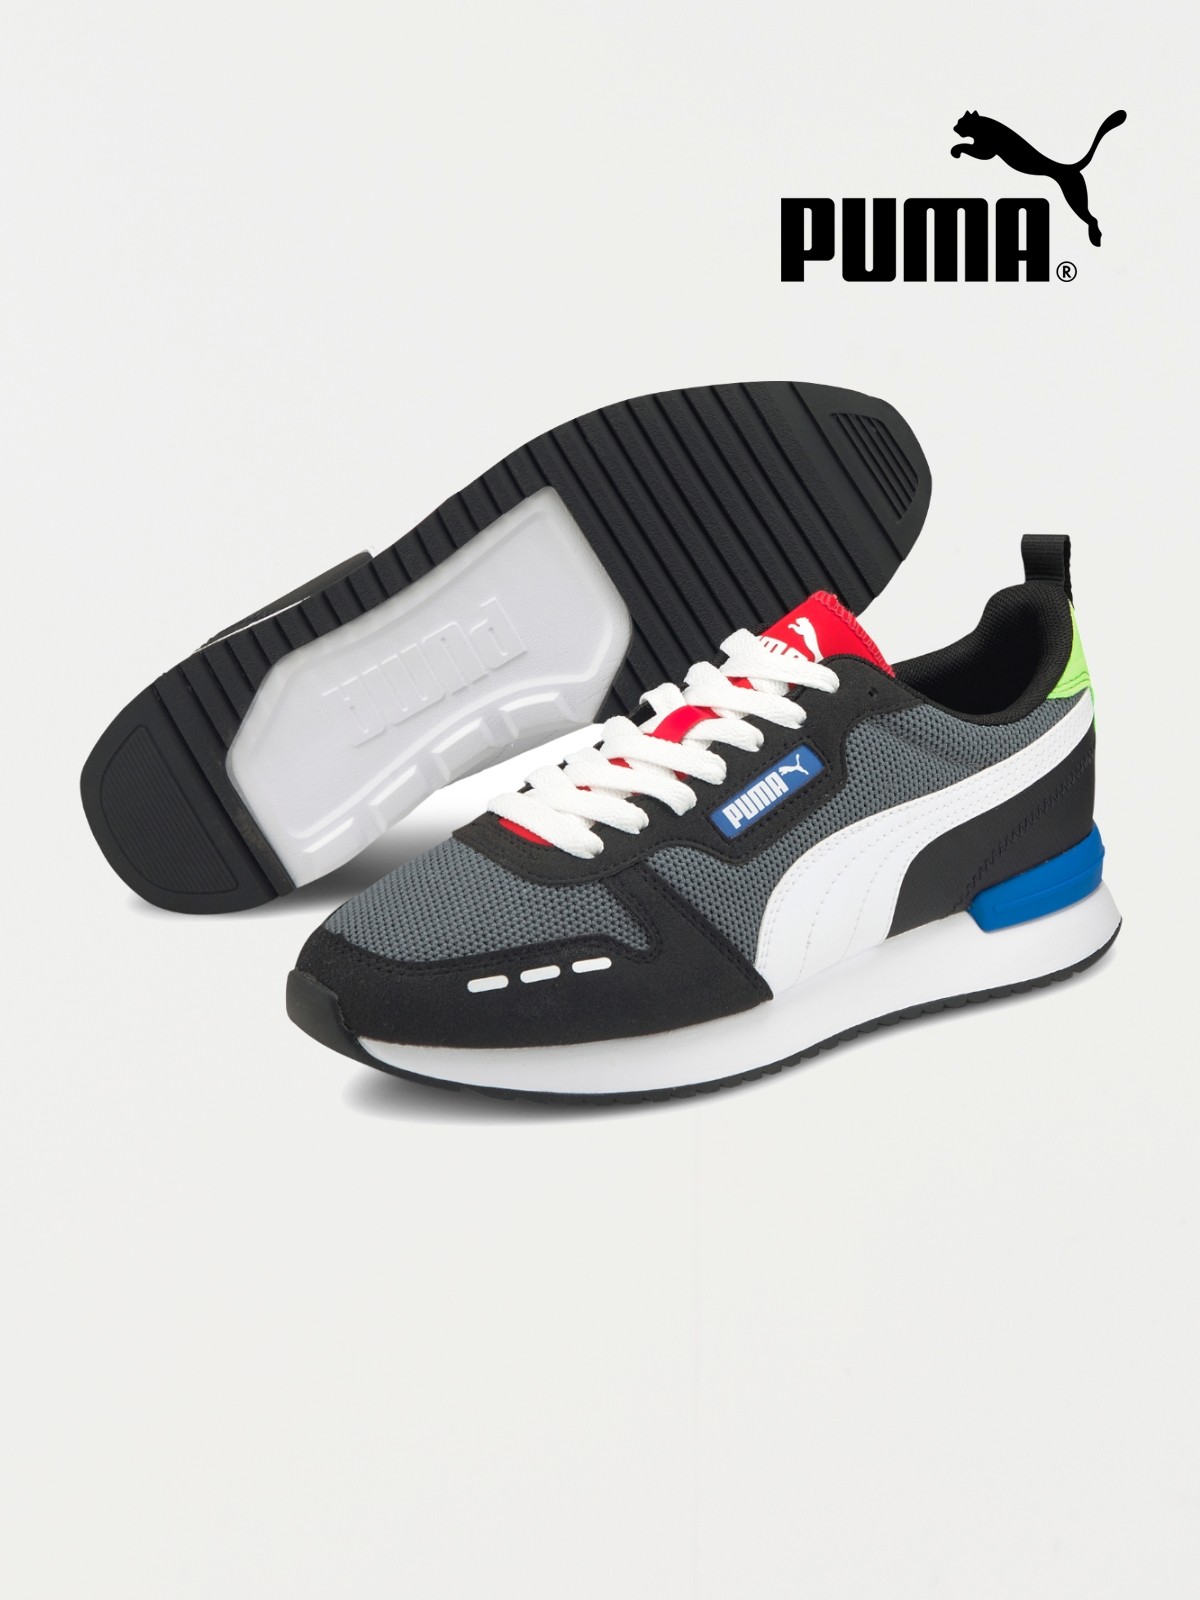 Baskets et Chaussures Puma